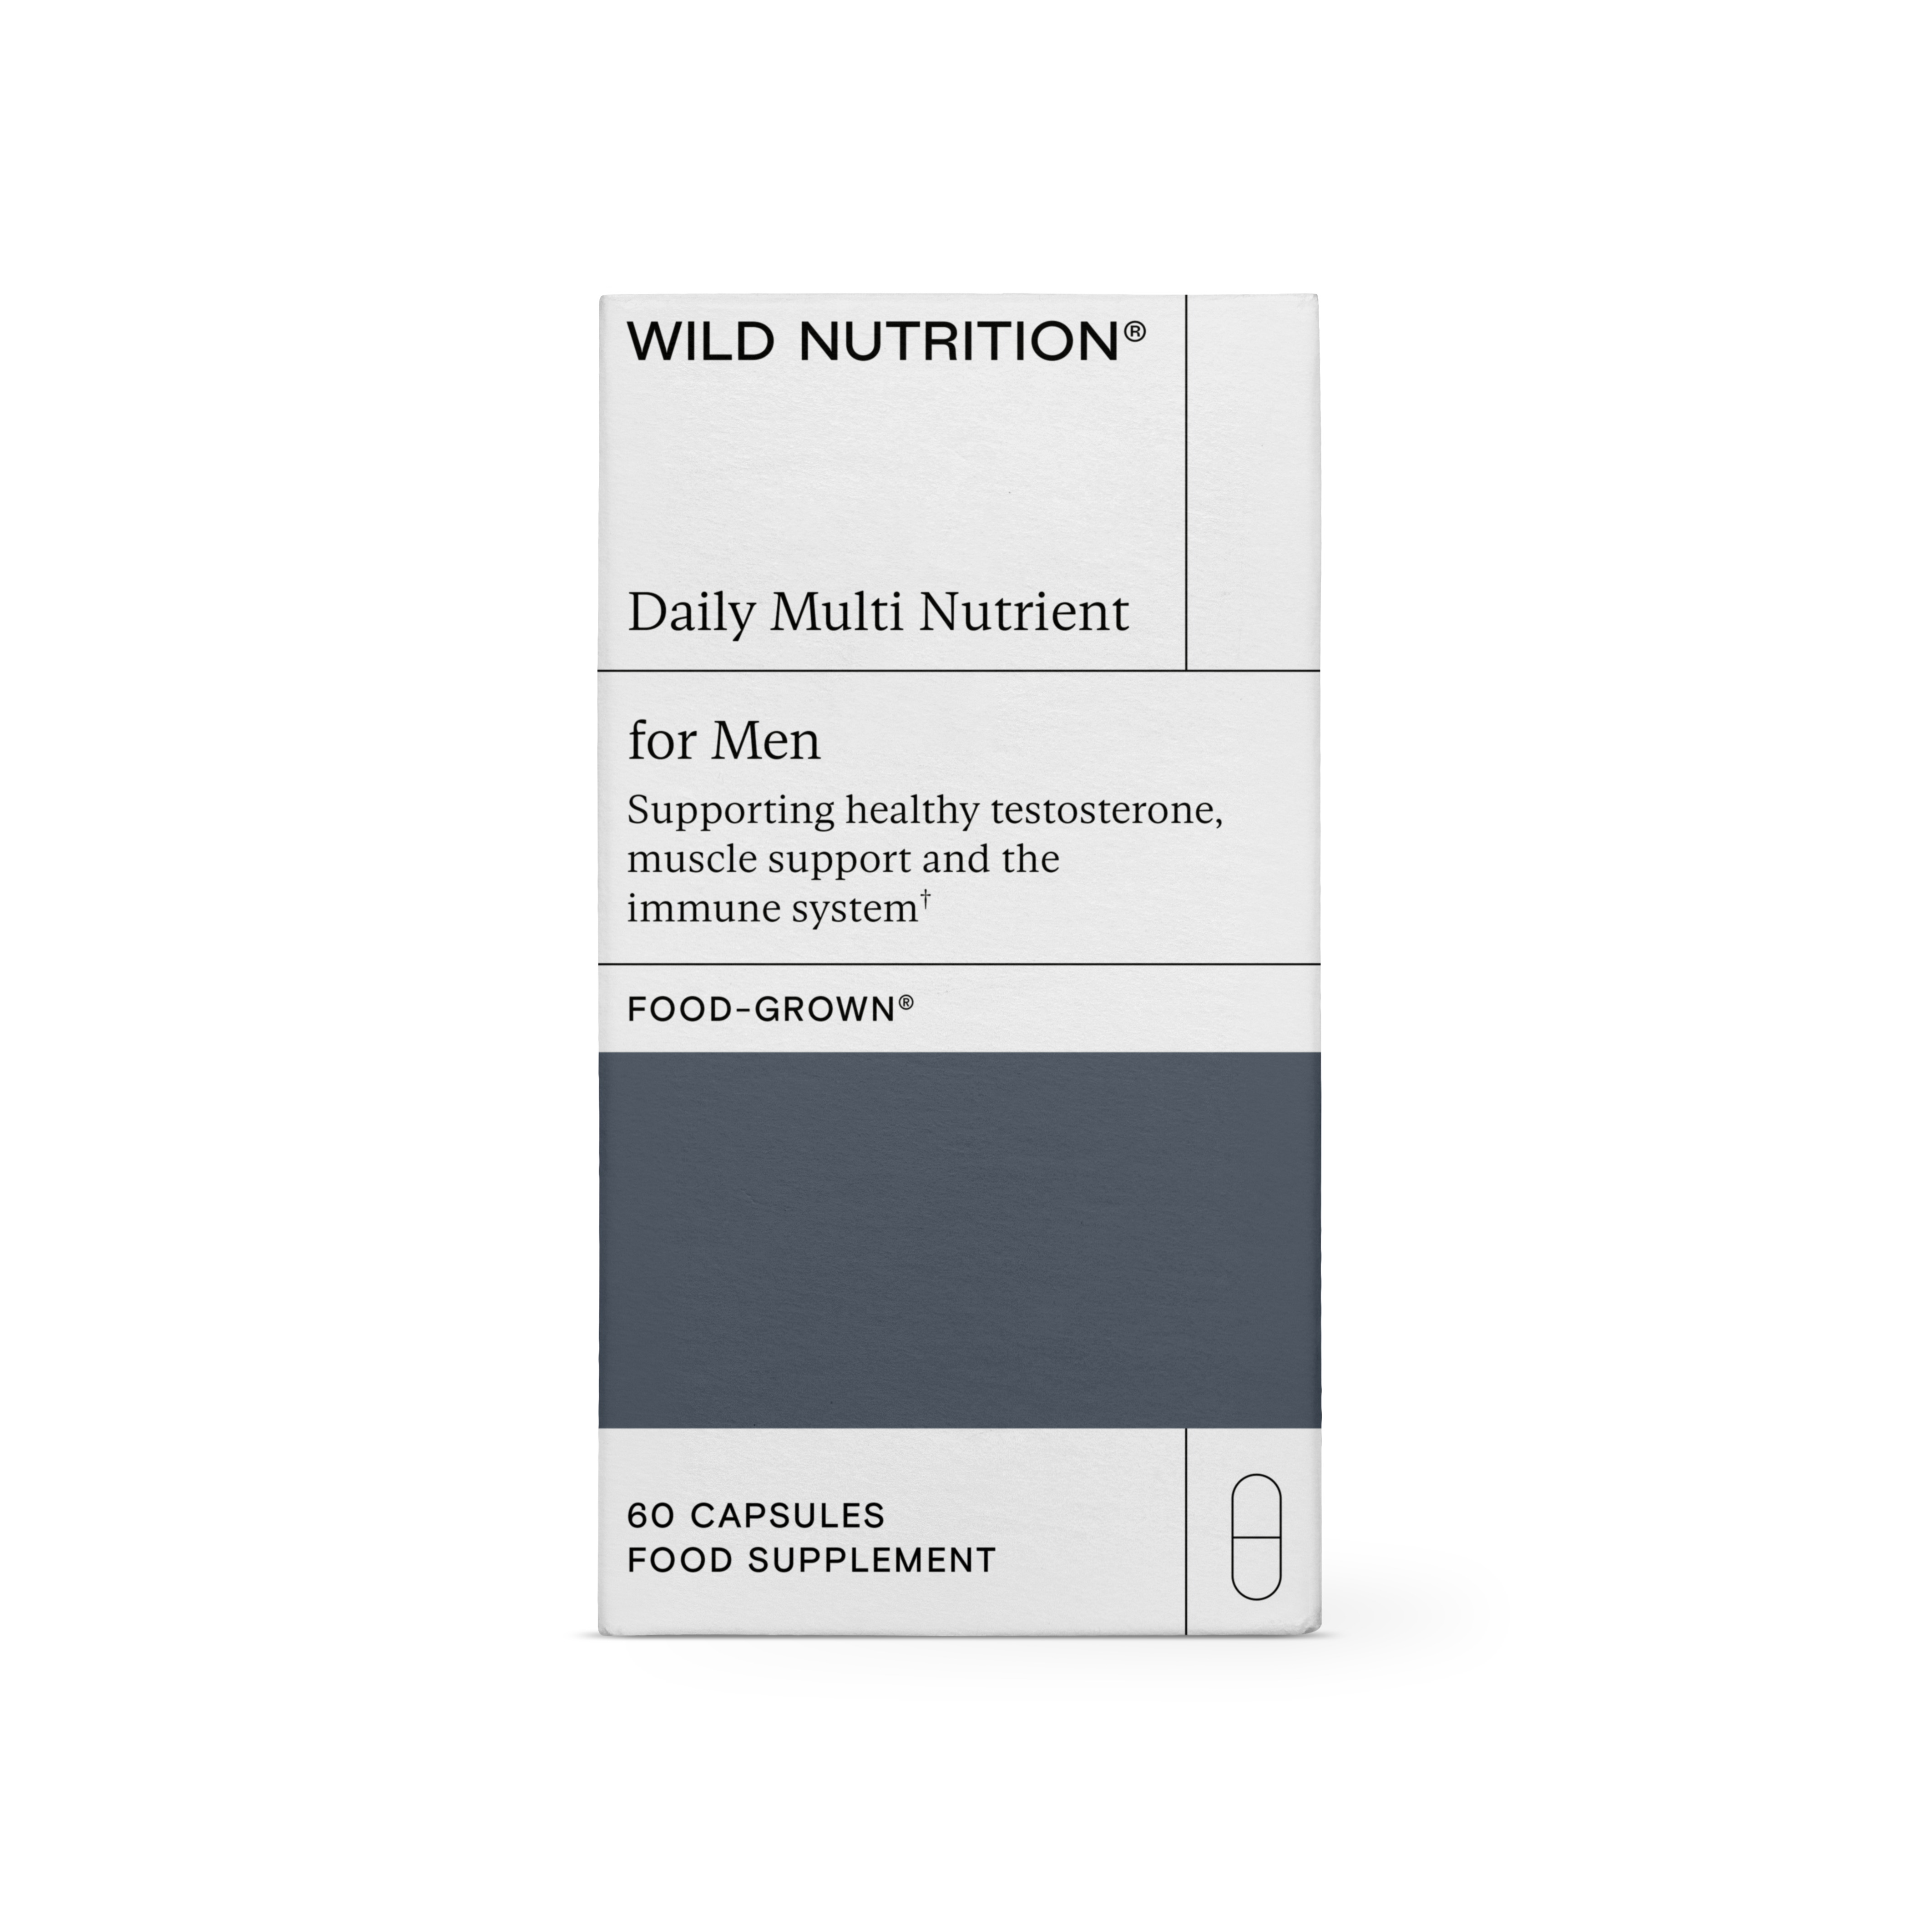 Daily Multi Nutrient for Men - 60 Capsules | Wild Nutrition